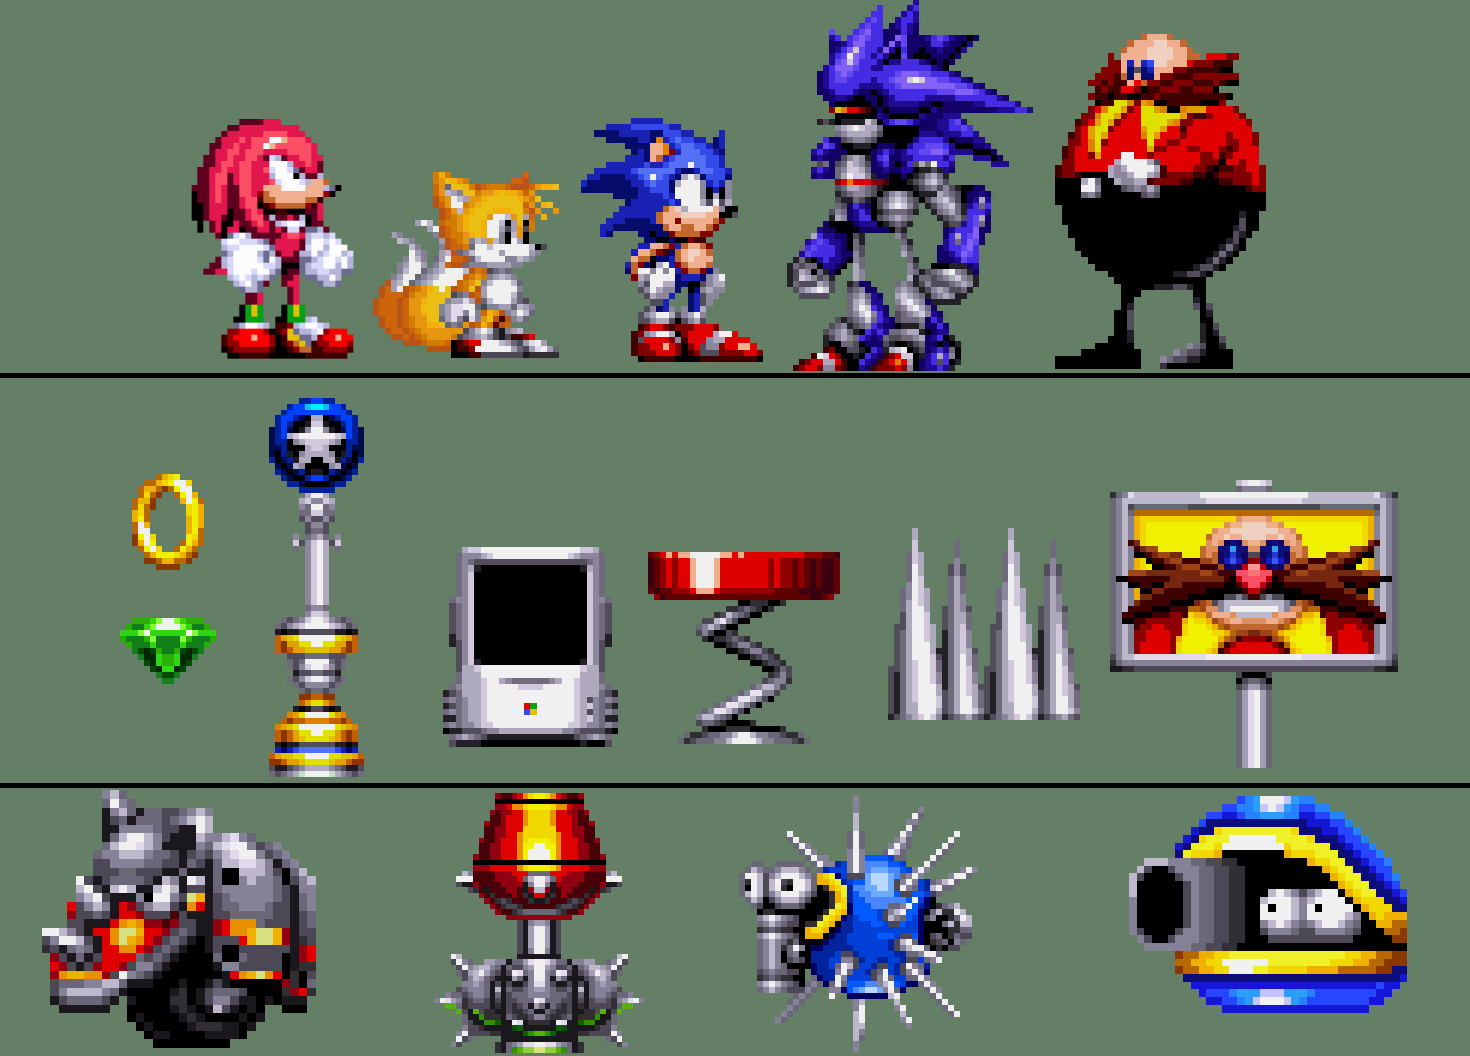 Metal Mania [Sonic 3 A.I.R. Port] [Sonic 3 A.I.R.] [Mods]